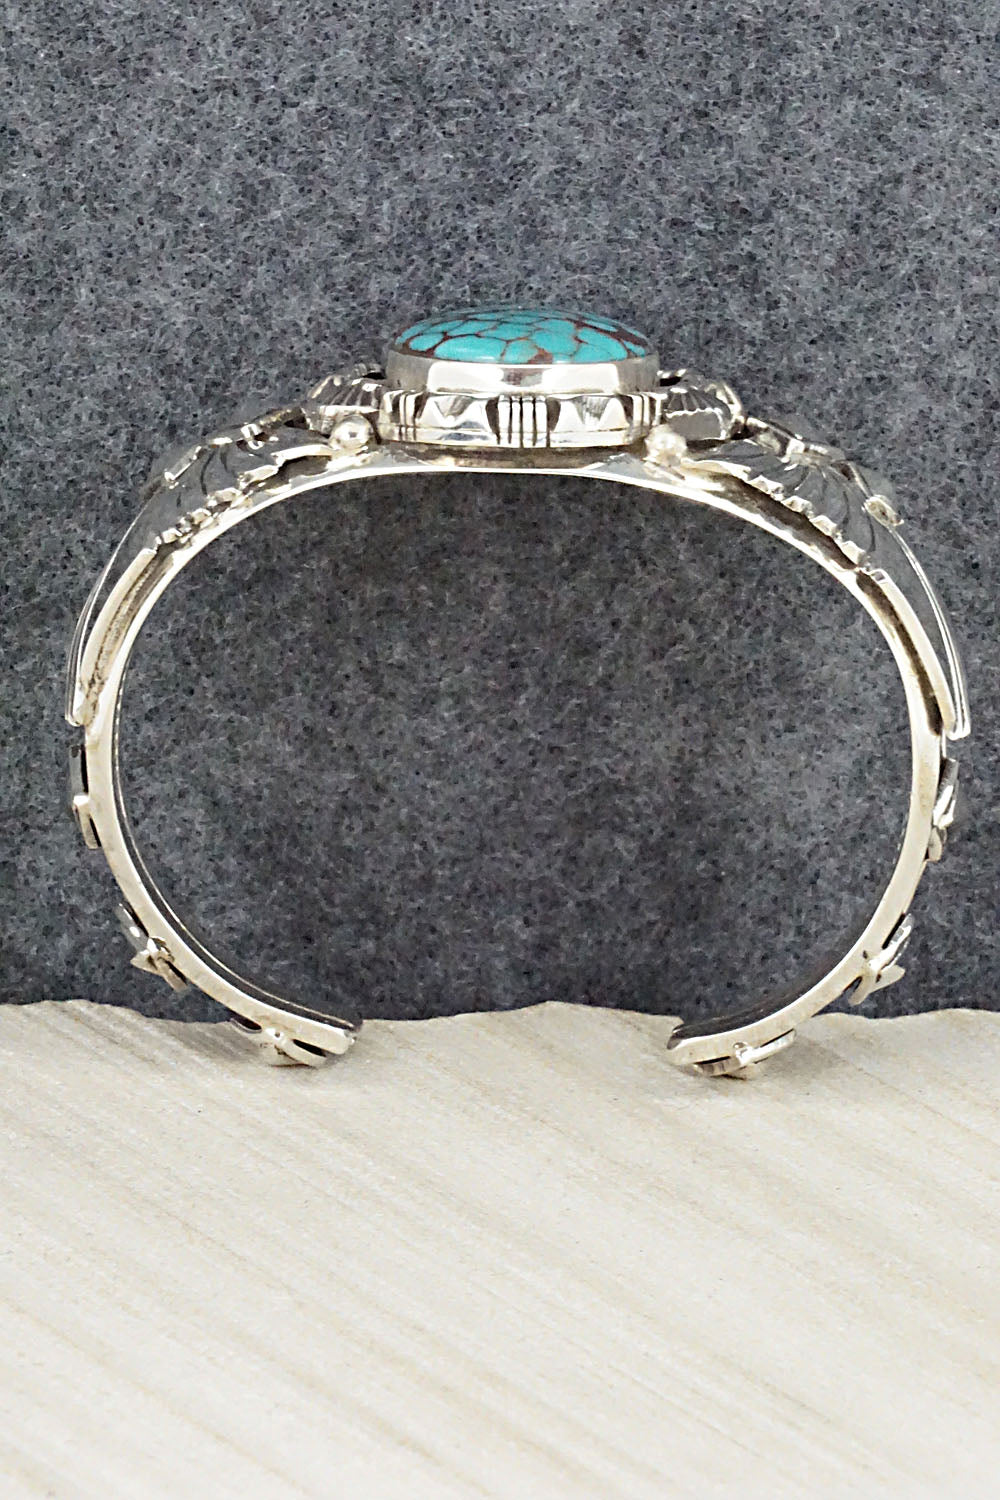 Turquoise & Sterling Silver Bracelet - Emerson Delgarito